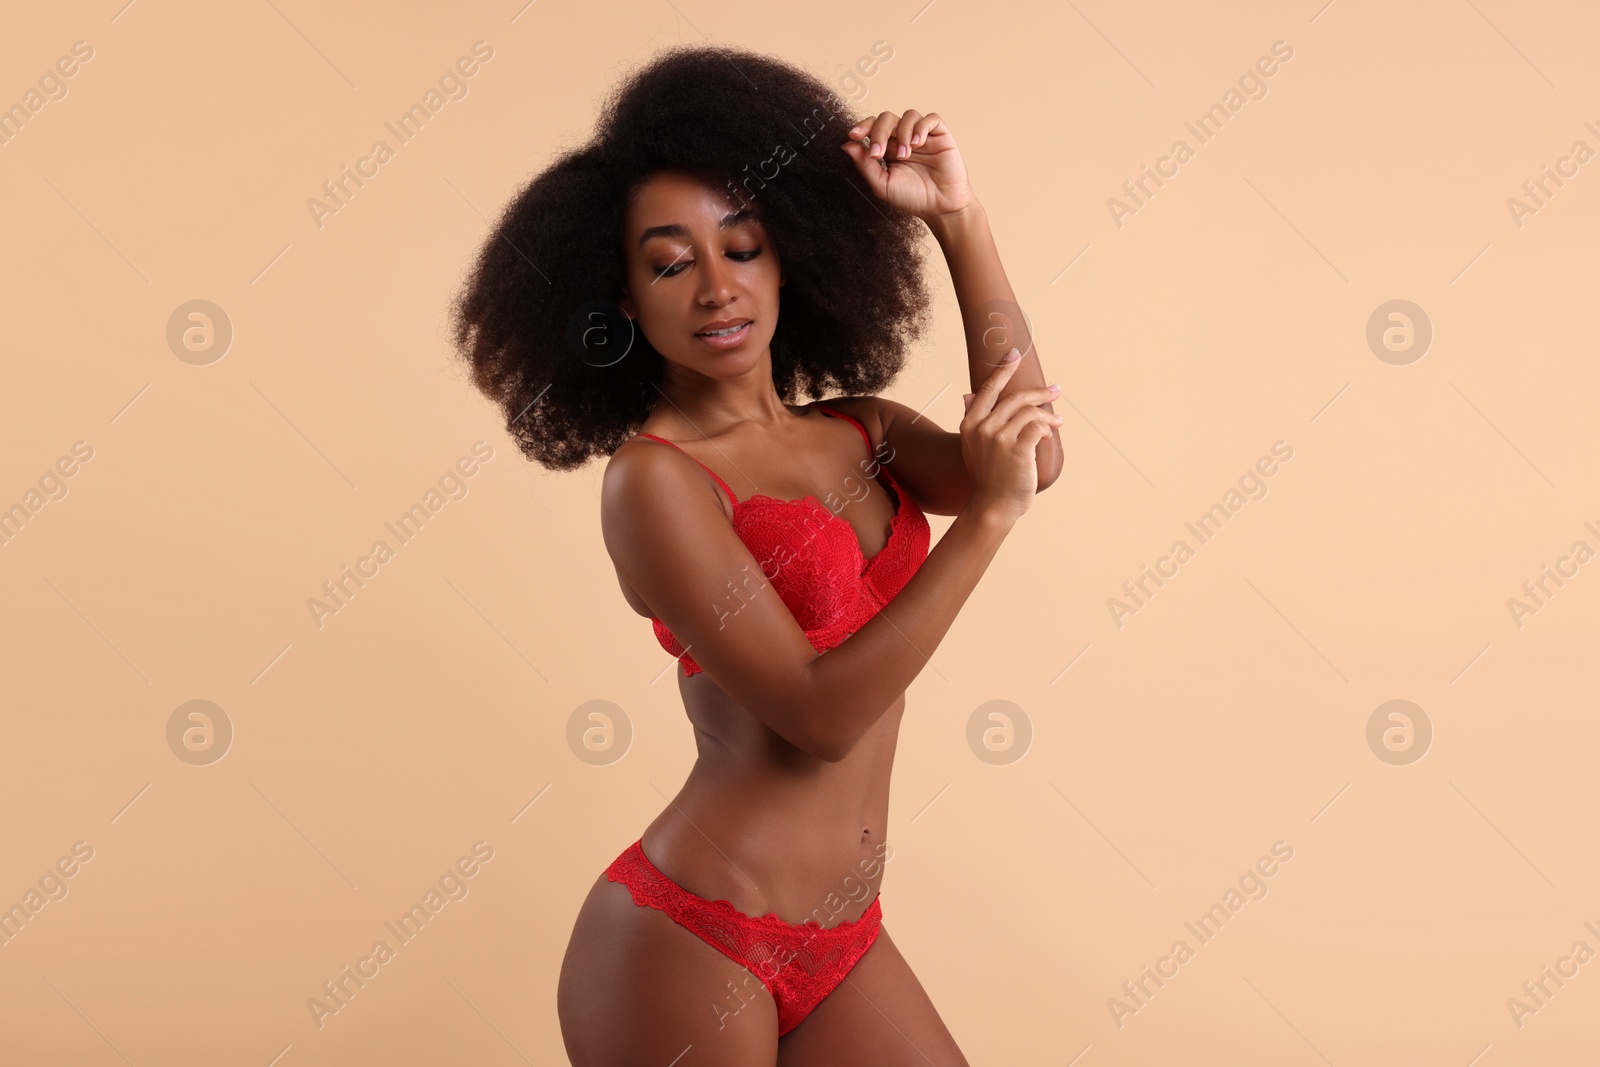 Photo of Beautiful woman in elegant red underwear on beige background